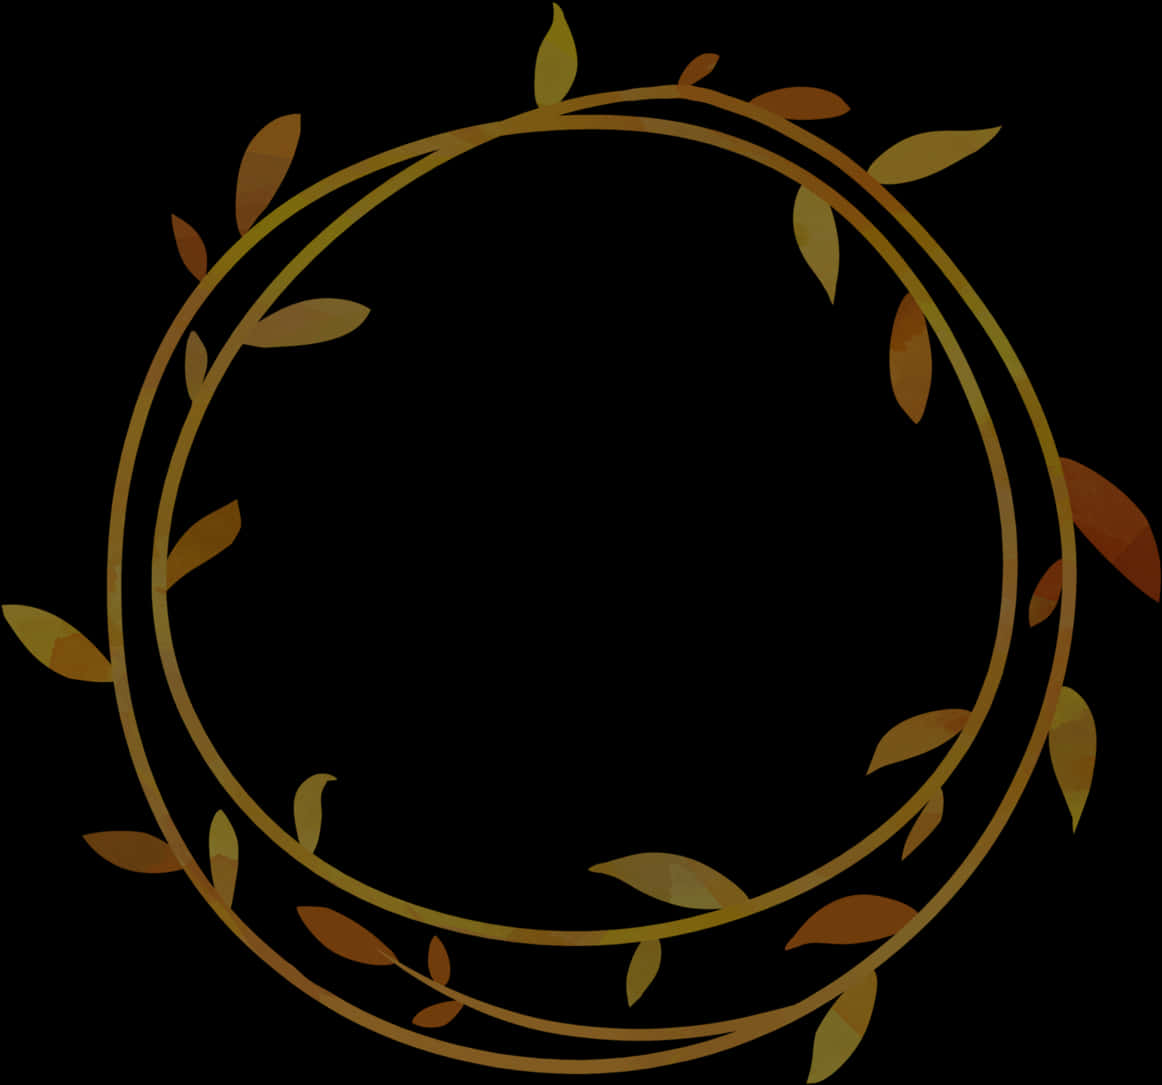 A Circular Gold Leaf Design